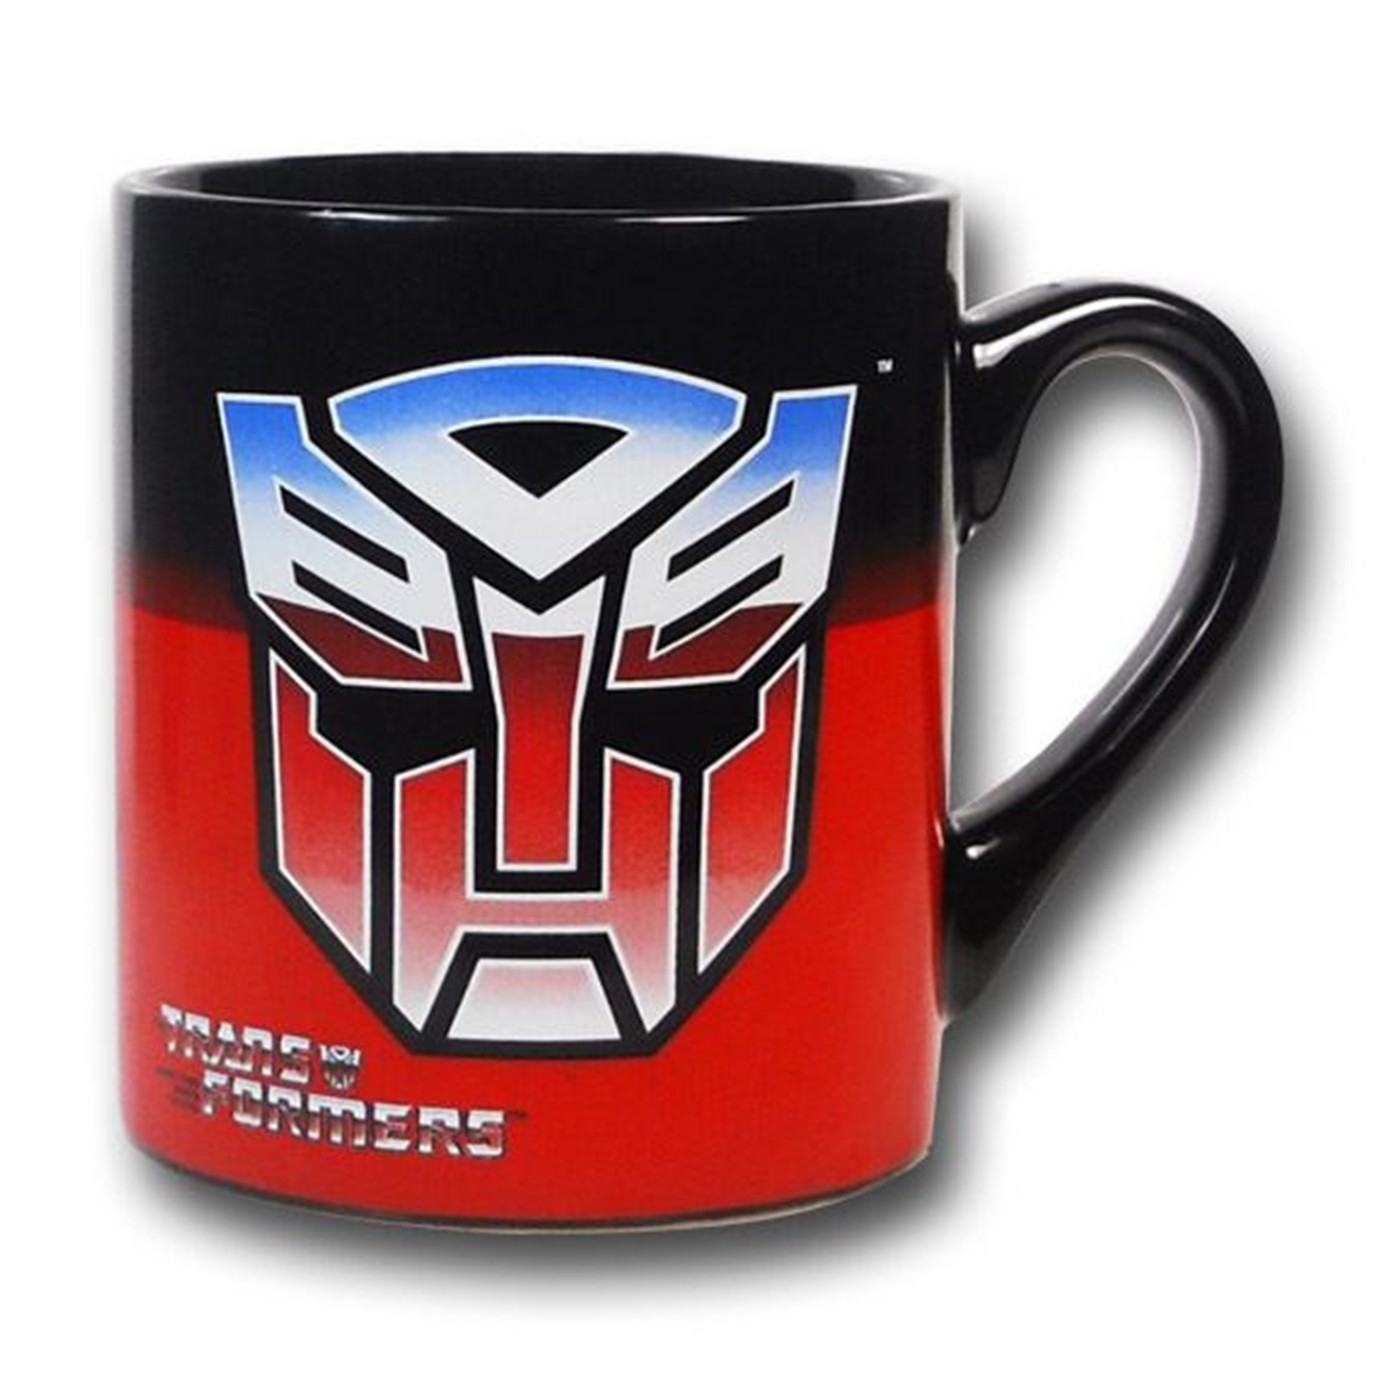 Transformers Autobots Black and Red Mug